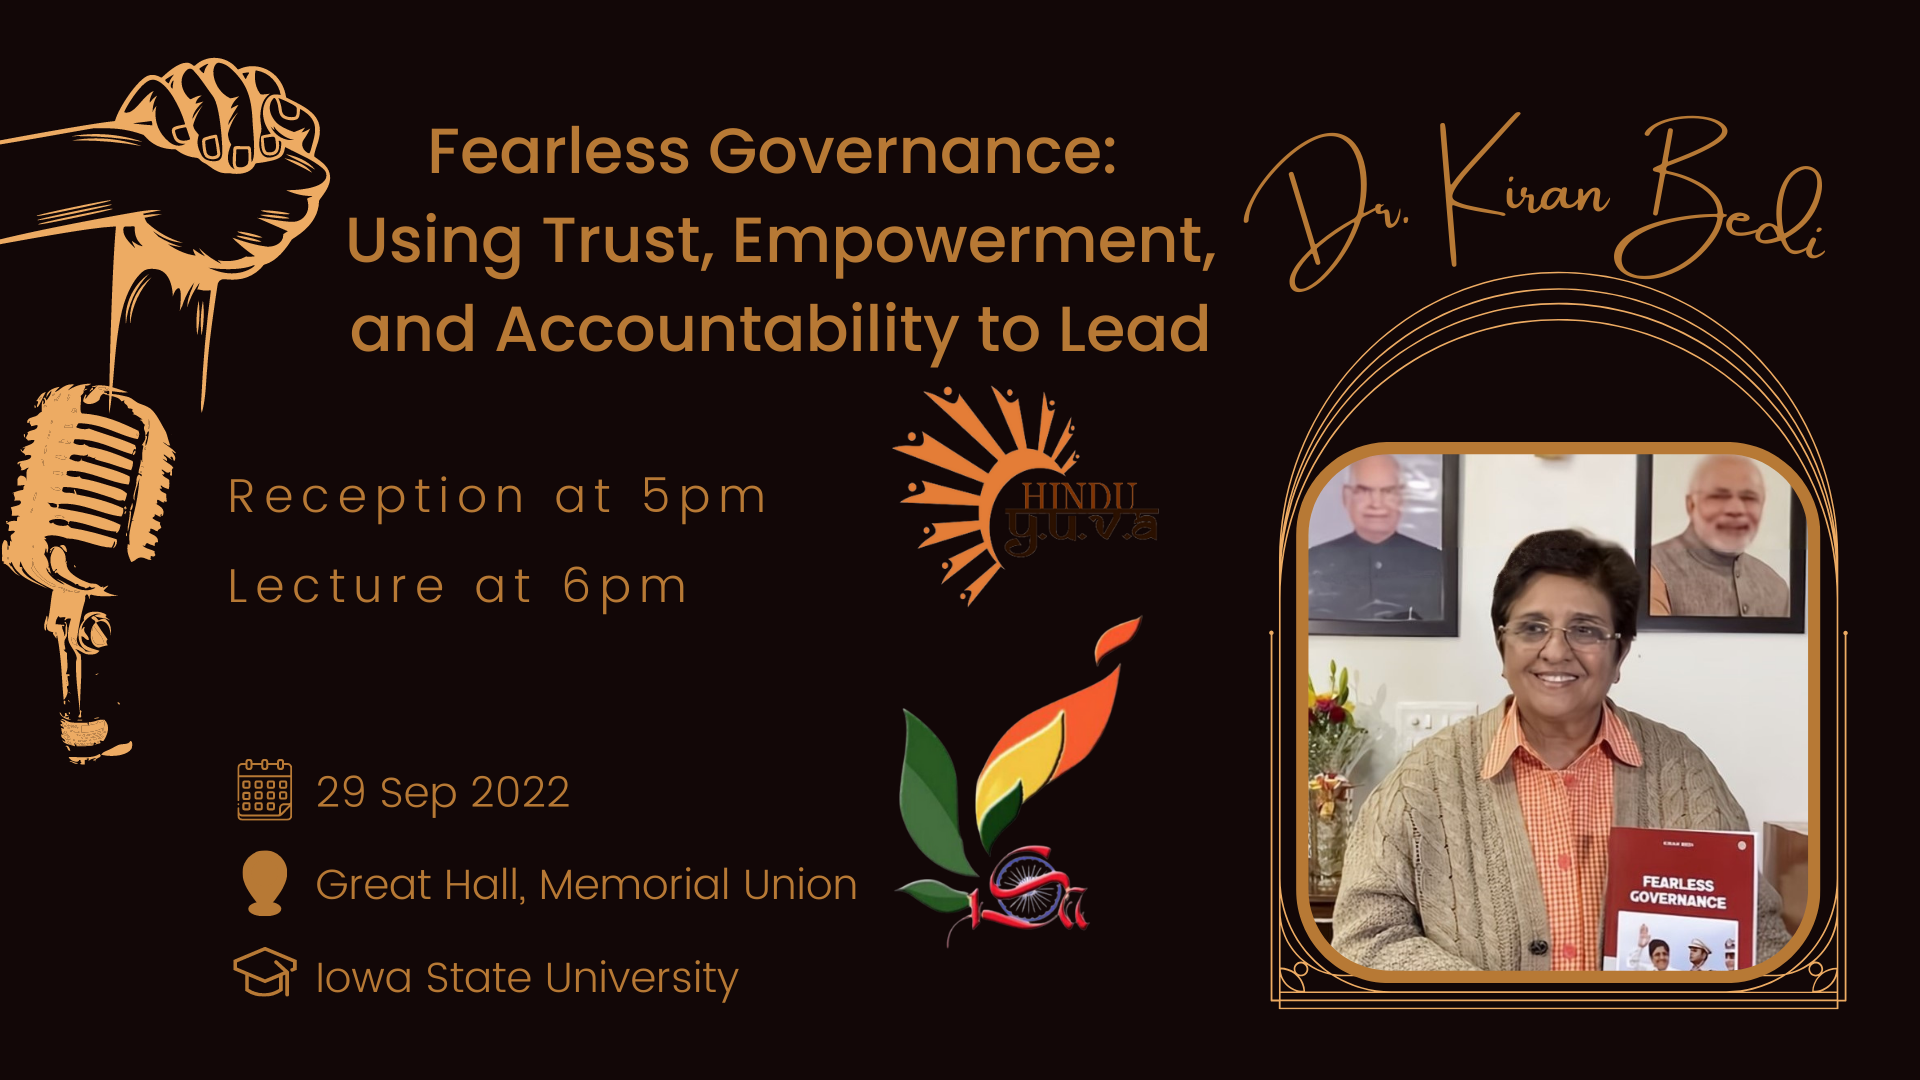 Dr. Kiran Bedi, Fearless Governance